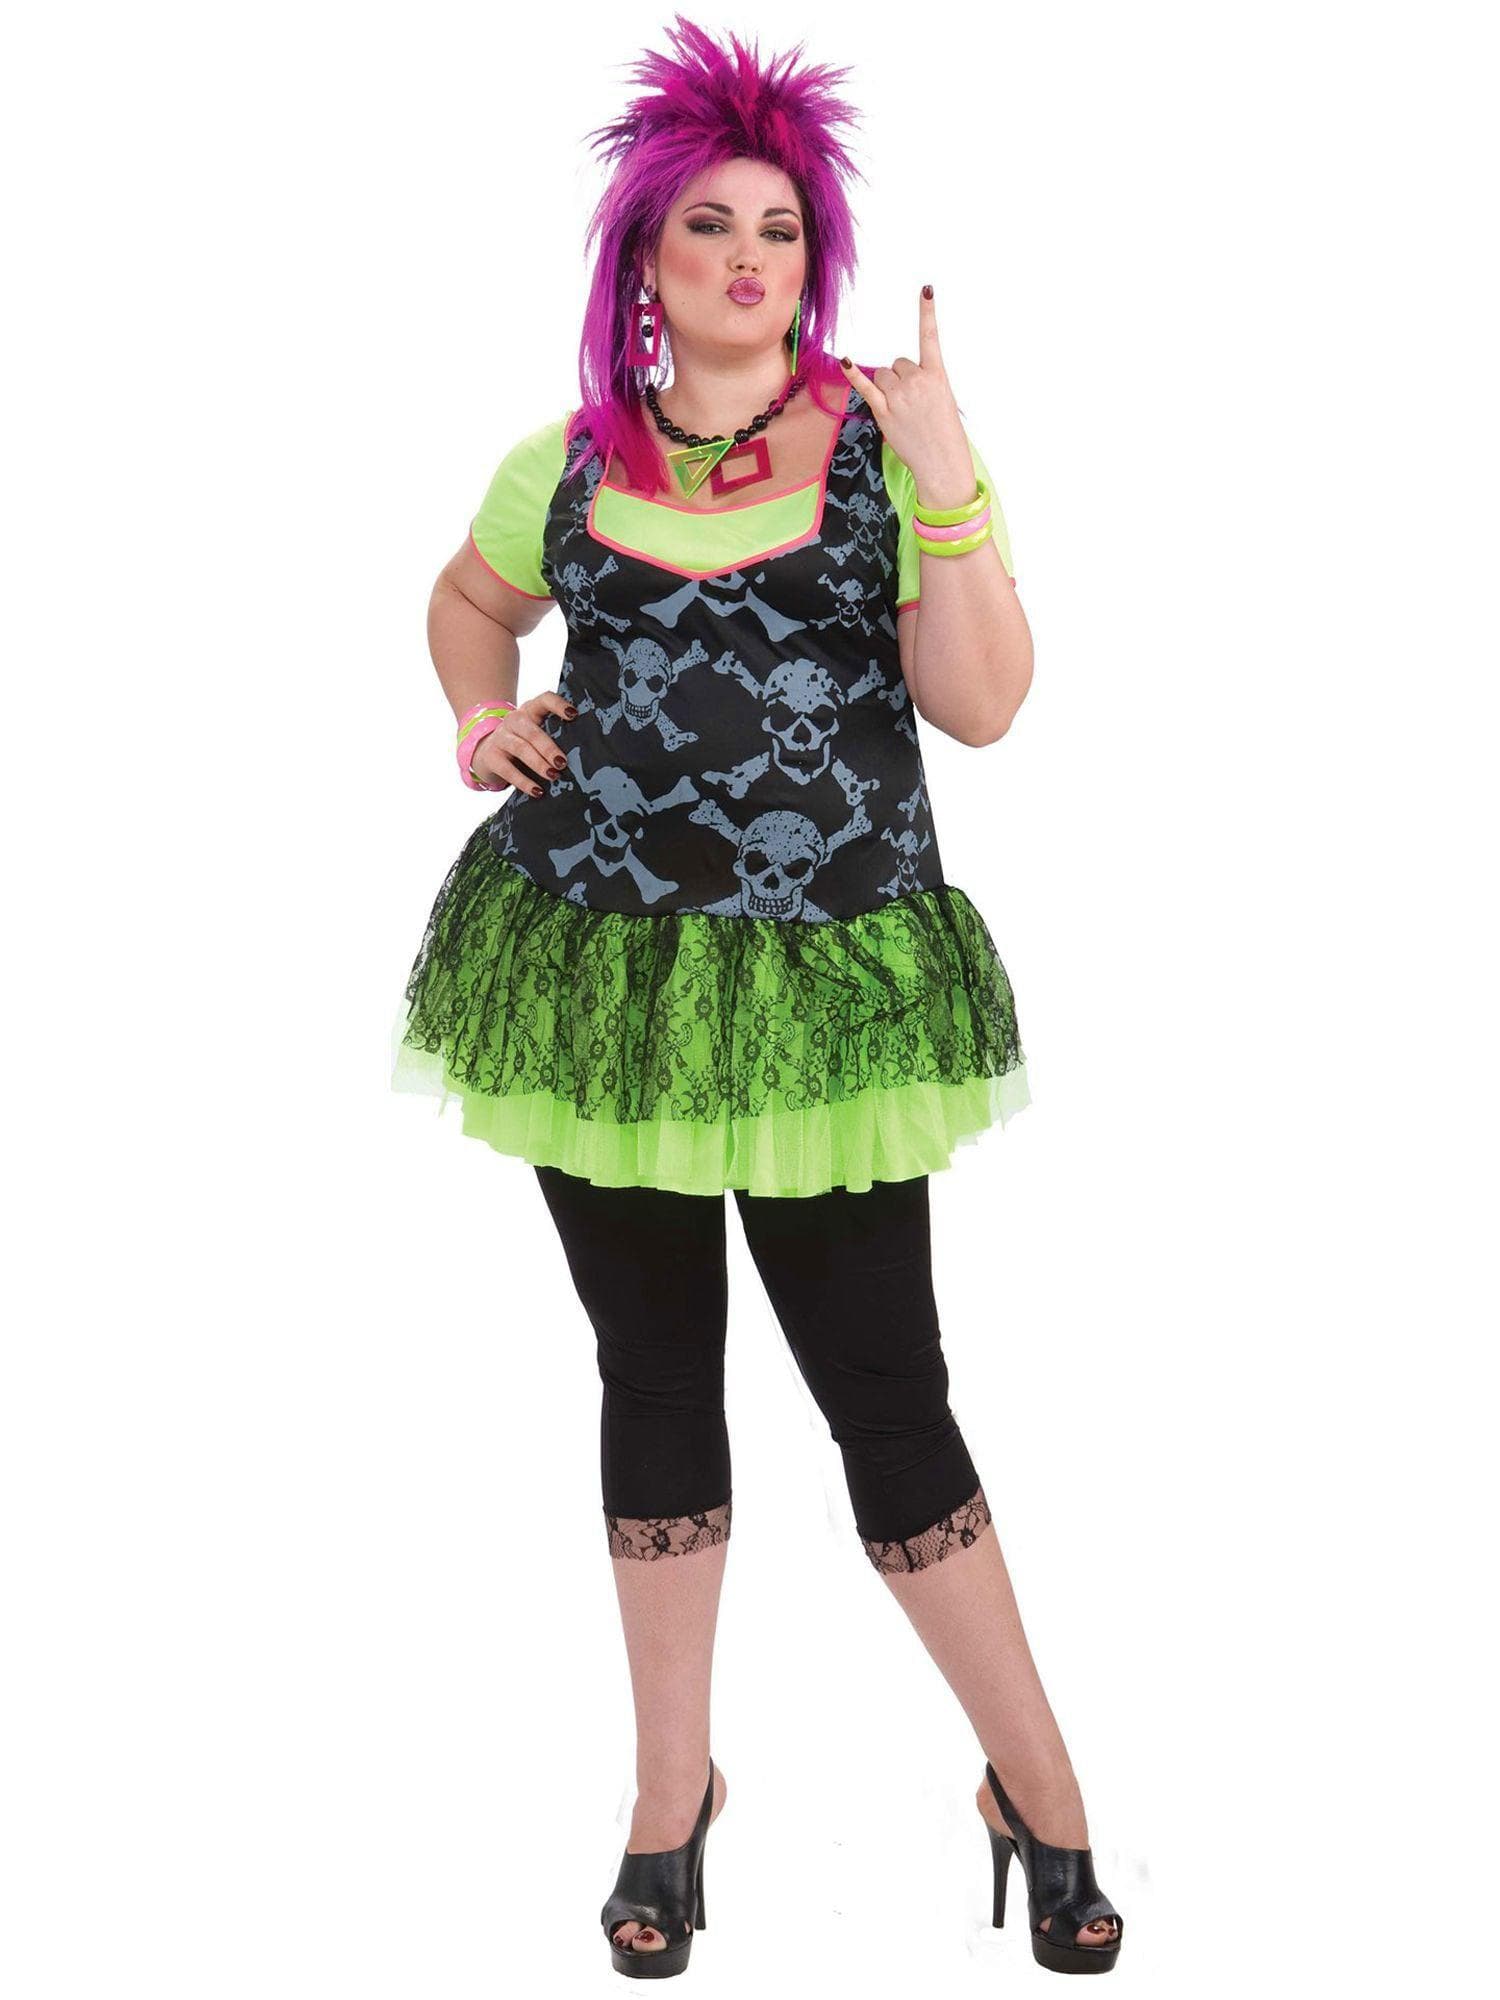 Adult 80s Punk Lady Plus Size Costume - costumes.com